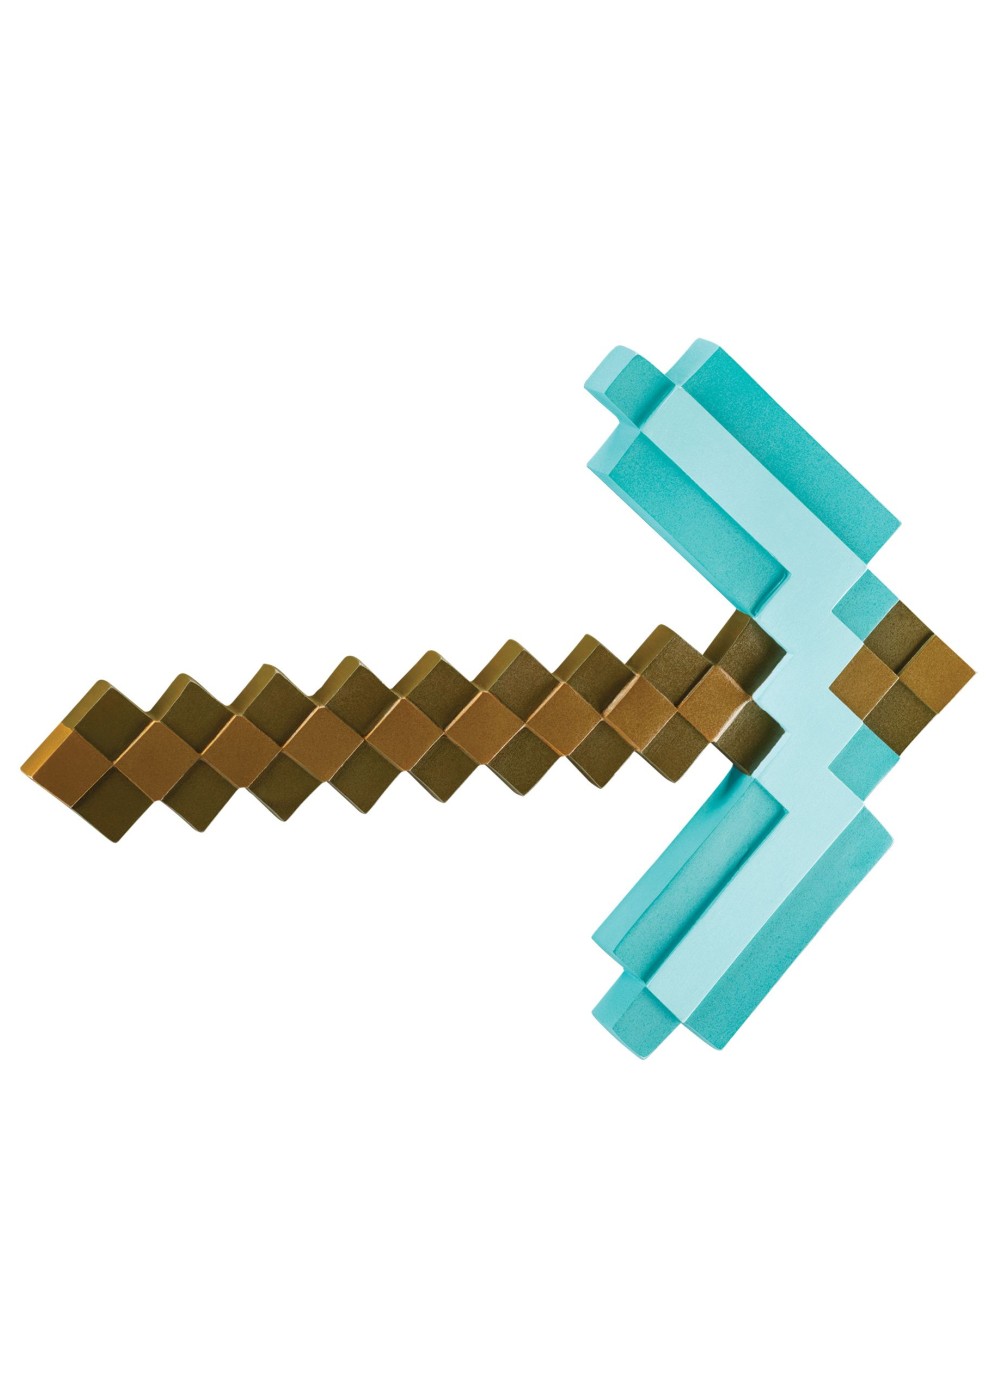 Boys Minecraft Pickaxe